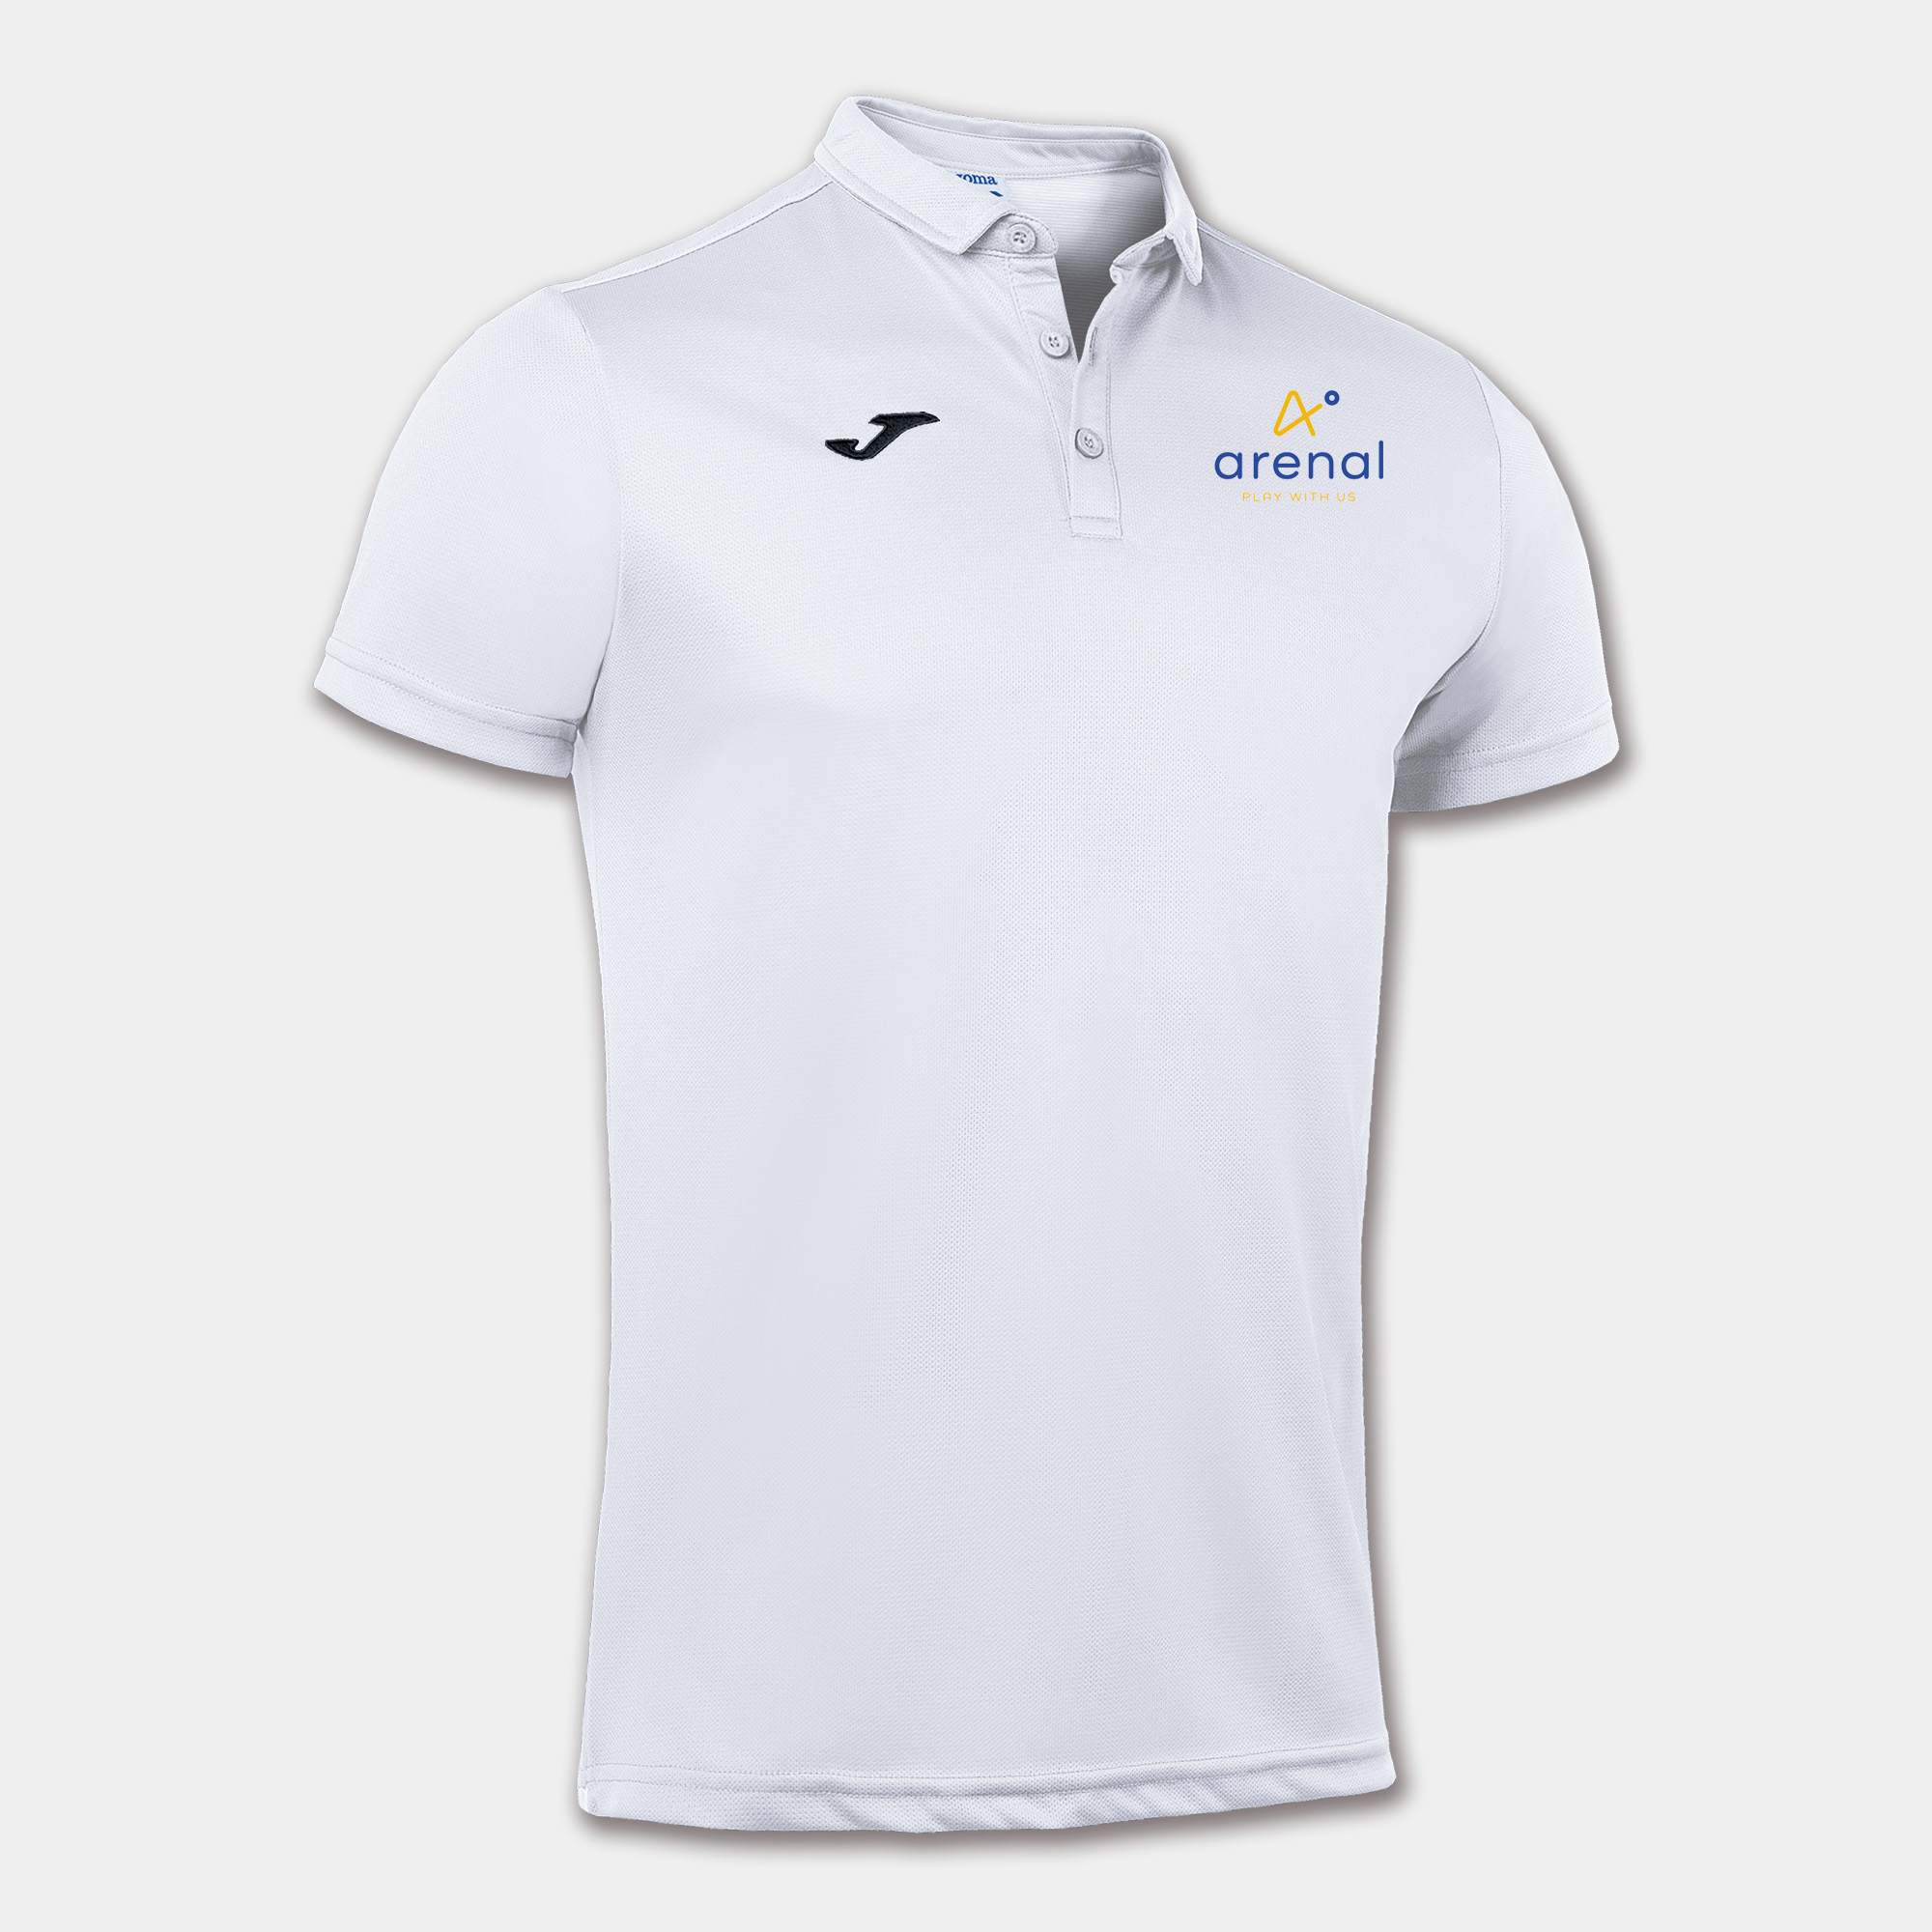 Arenal - Polo shirt short-sleeve man Hobby white